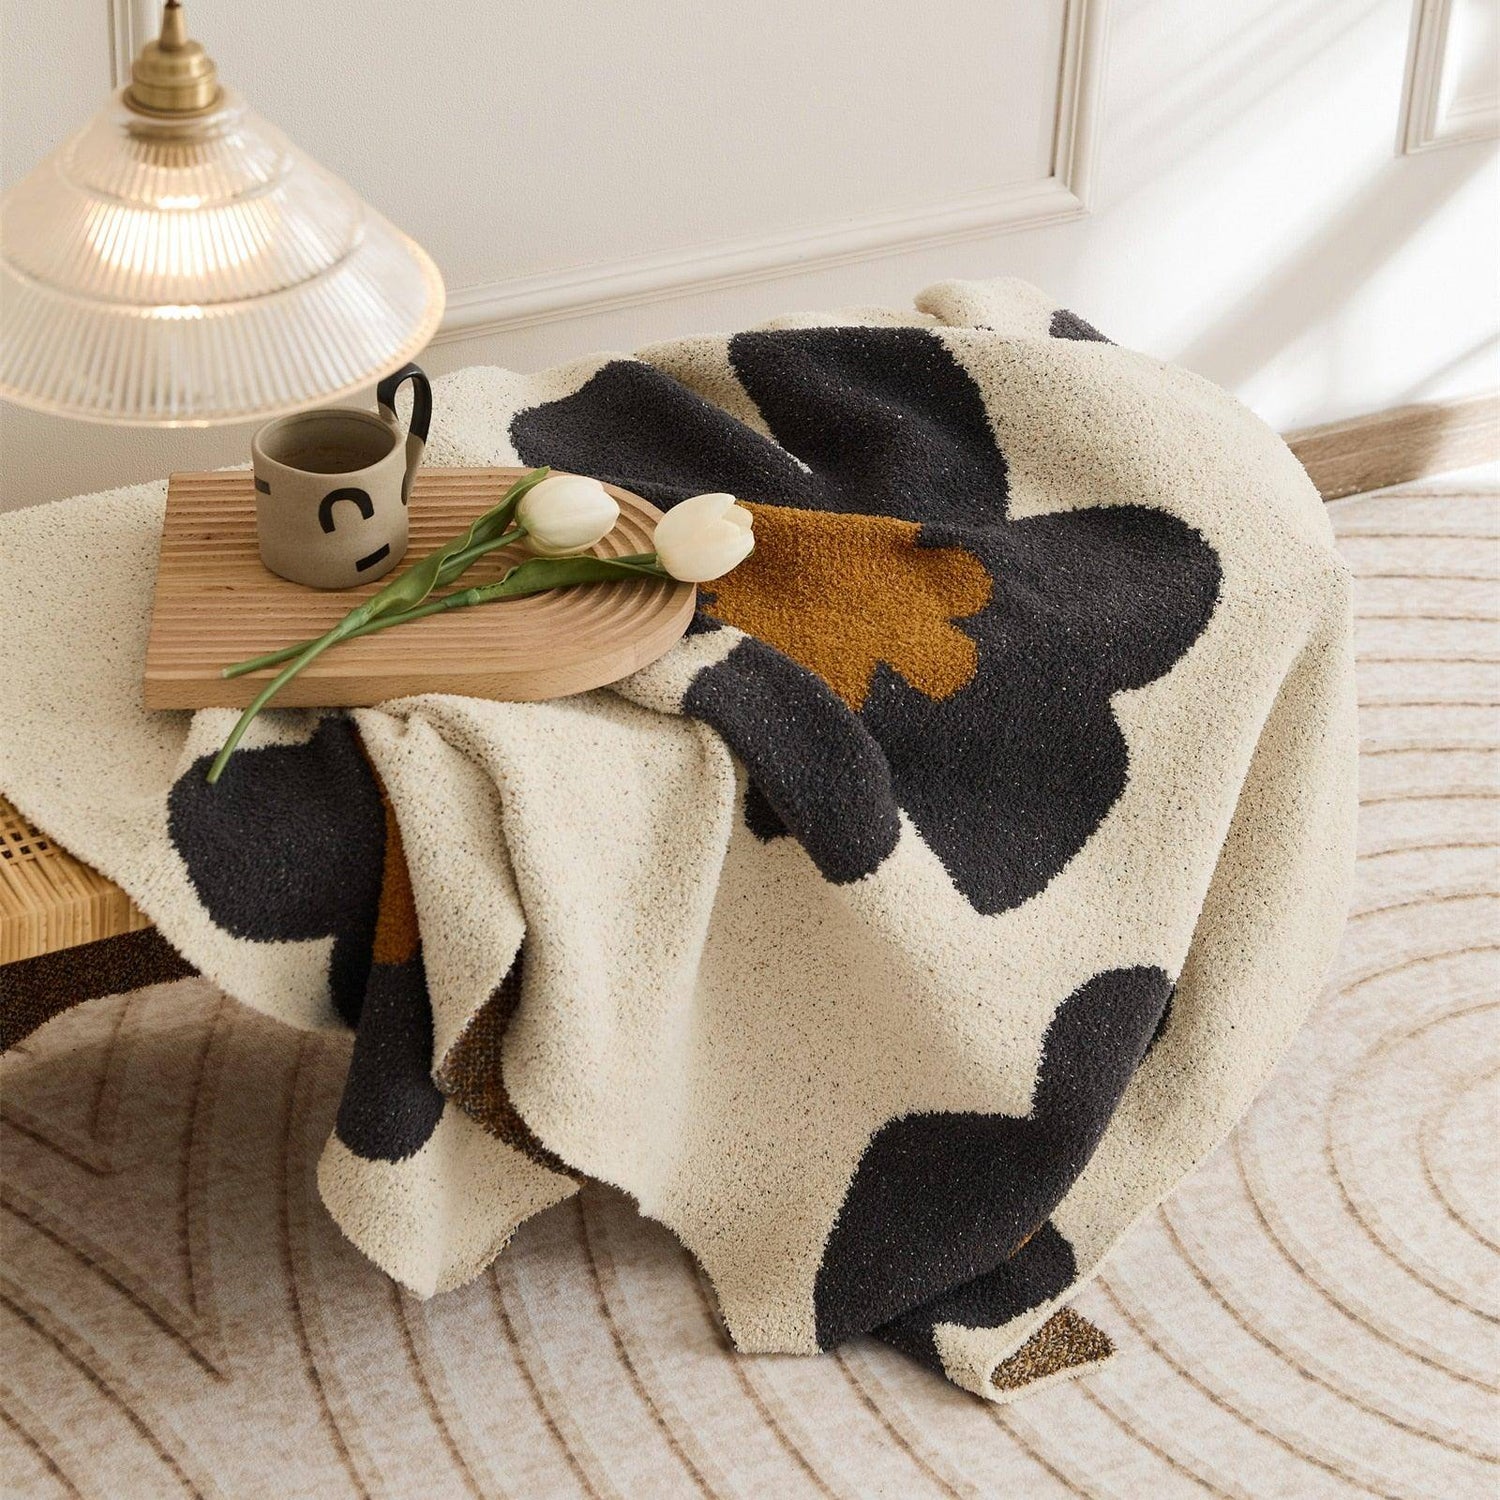 REGINA Brand Super Soft Cozy Floral Blanket Downy Hairy Fluufy Microfiber Knitted Throw Blanket For Bed Sofa Decorative Blankets - Fluffyslip